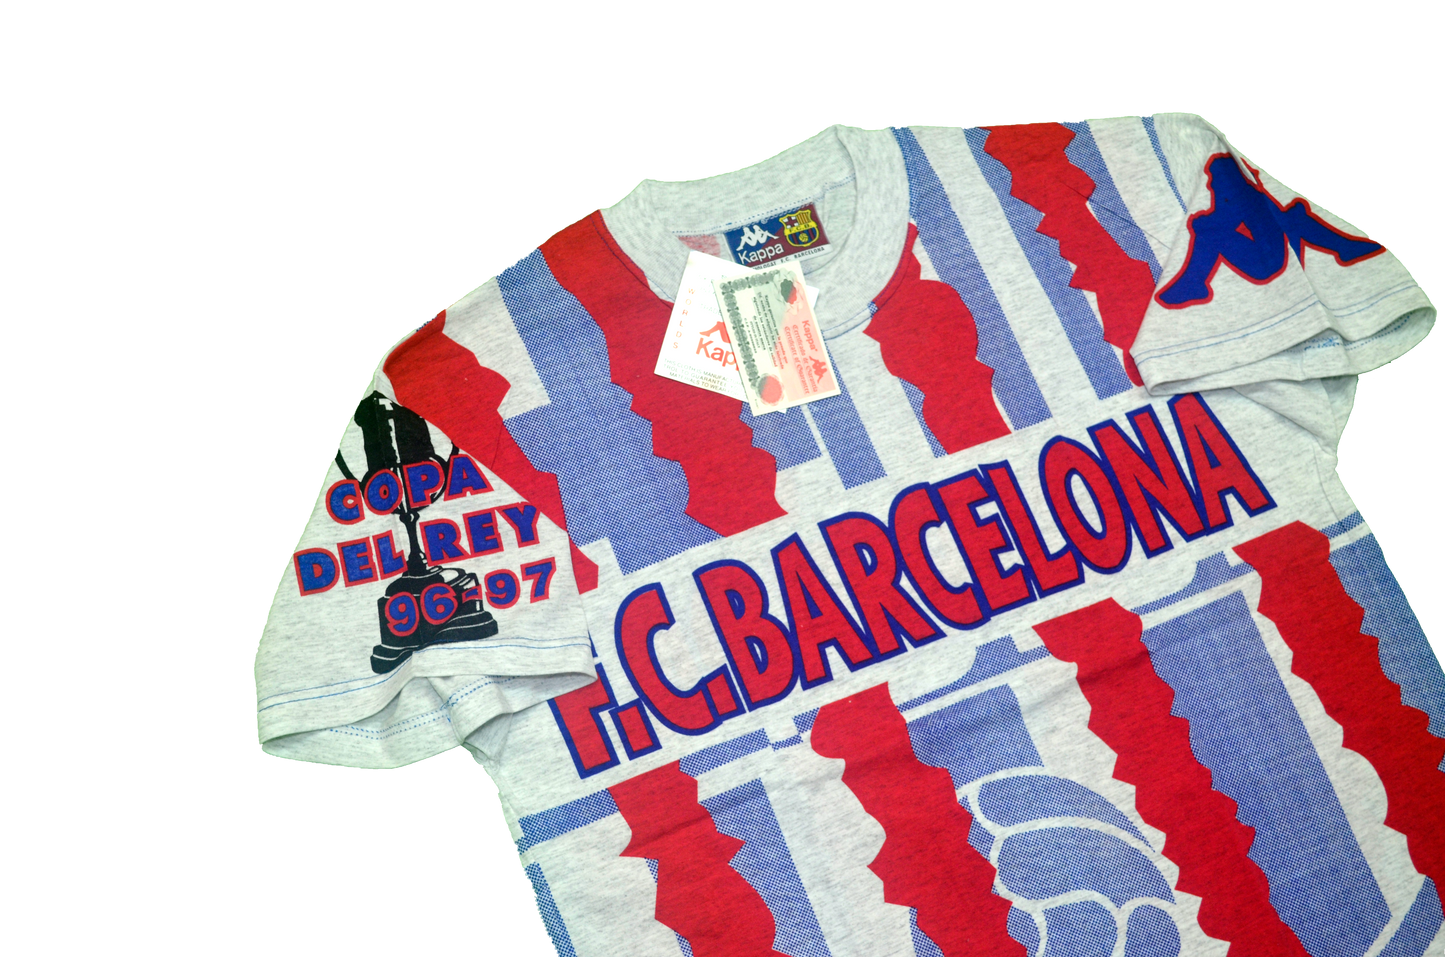 1996-97 Grey Tee FC Barcelona Copa del Rey Champs